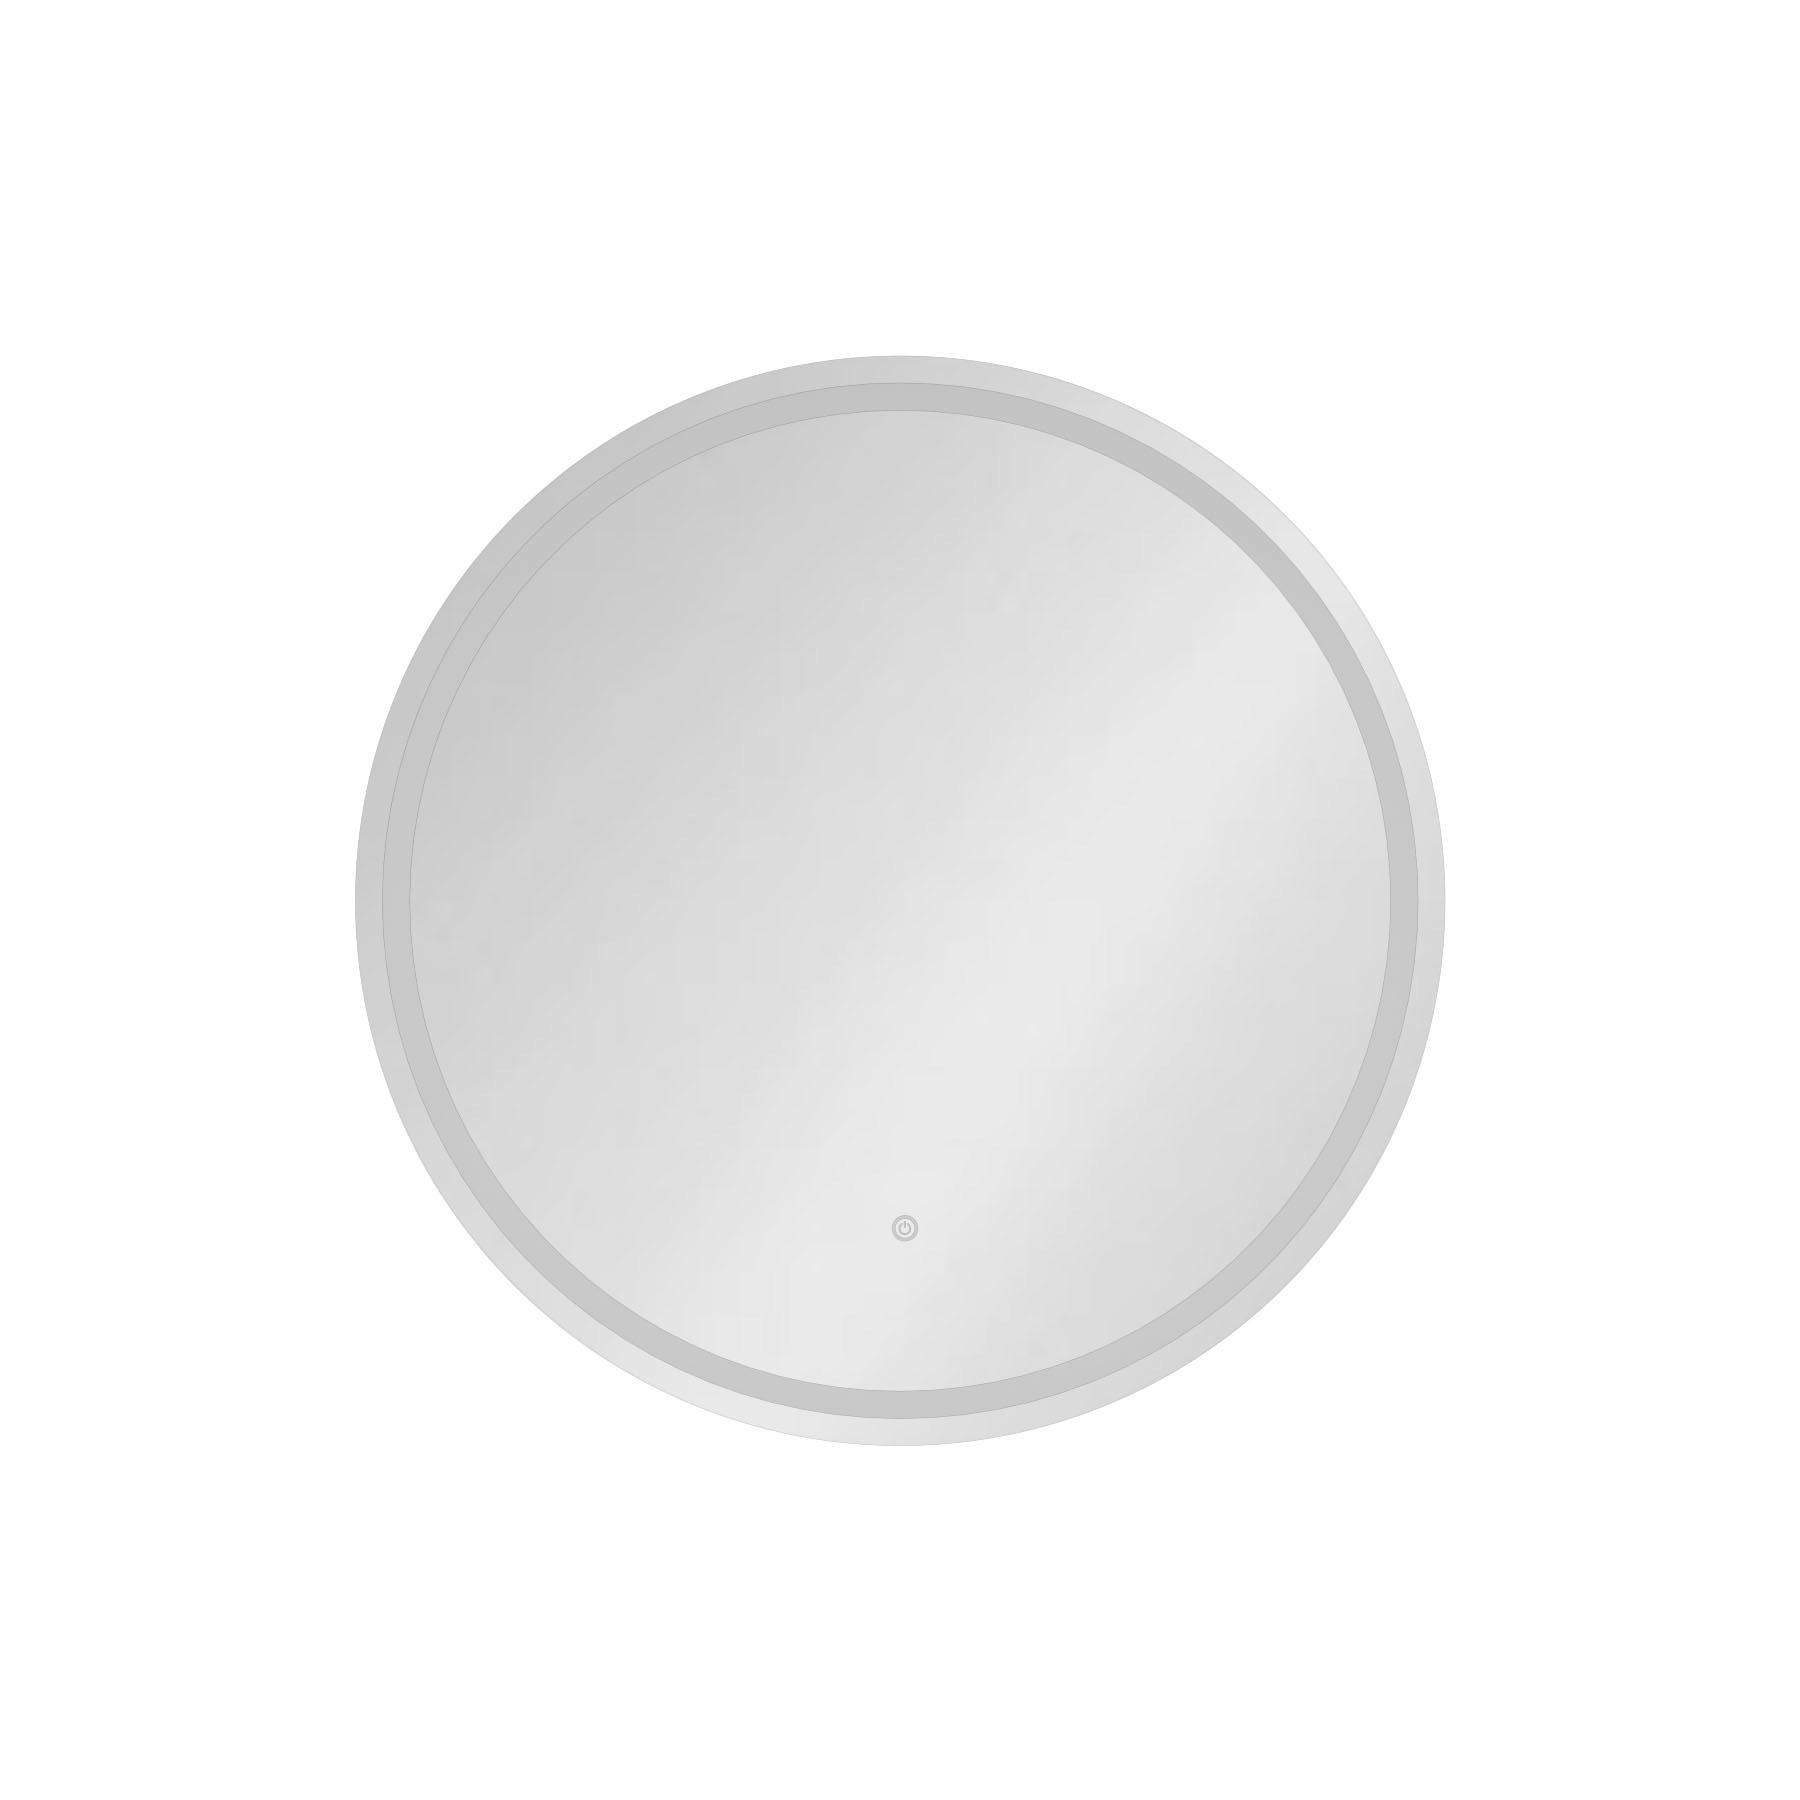 Enso 800 x 800mm Round LED Illuminated Anti-Fog Mirror with Touch Sensor